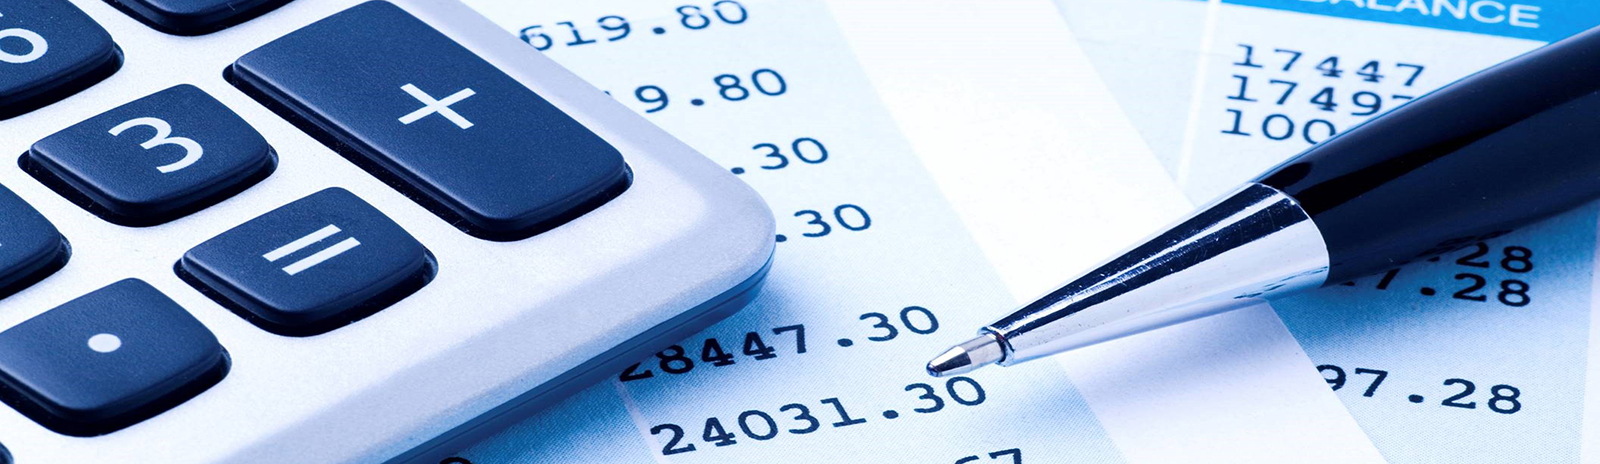 a calculator and pen sitting on a balance sheet